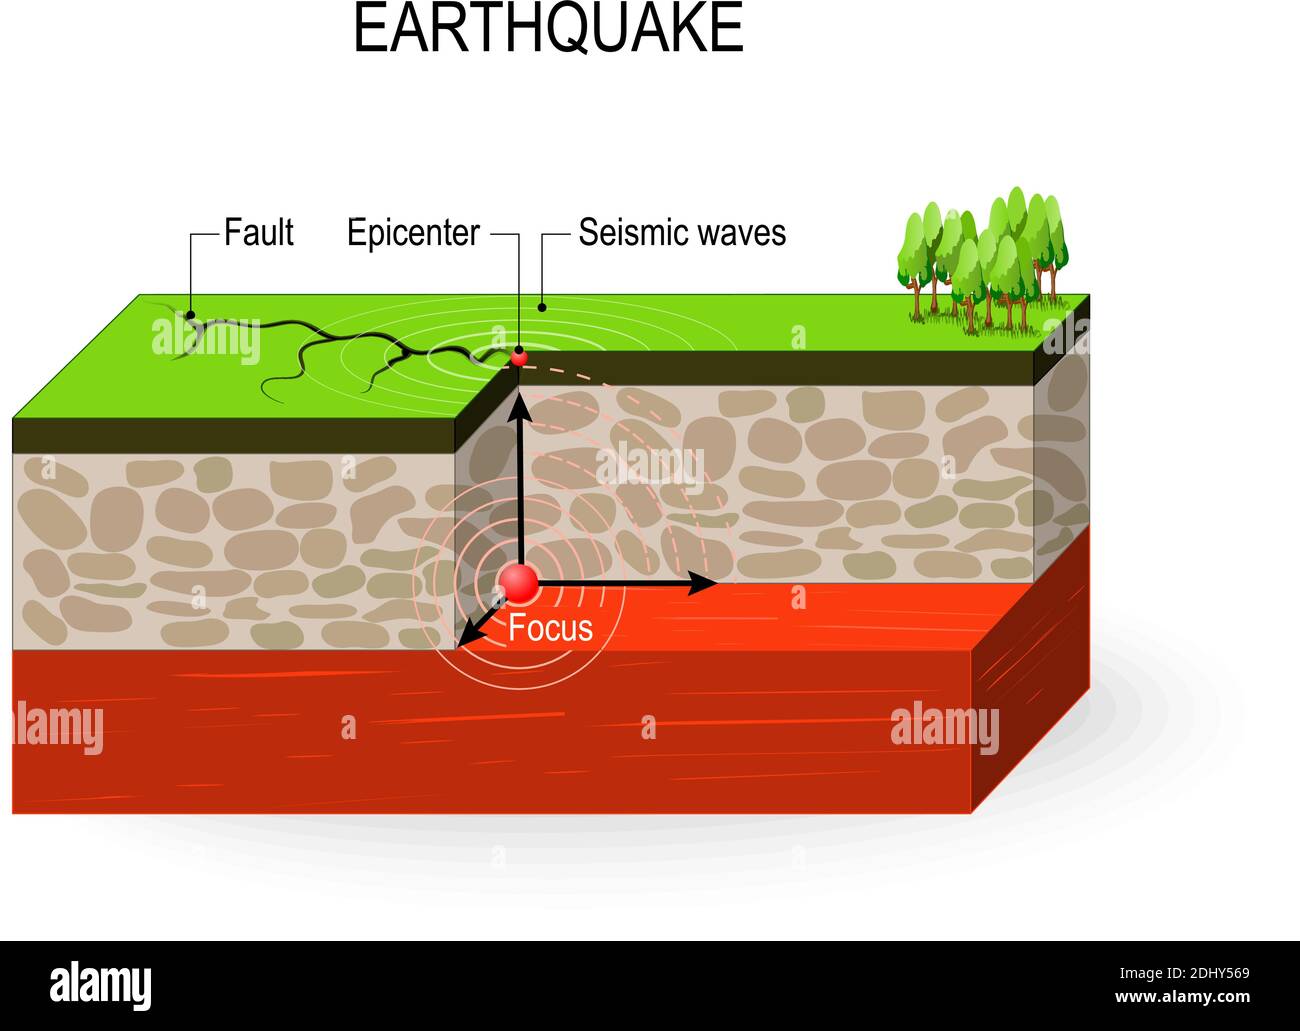 Earthquake. seismic activity: Seismic waves, fault, focus and epicenter earthquake Stock Vector